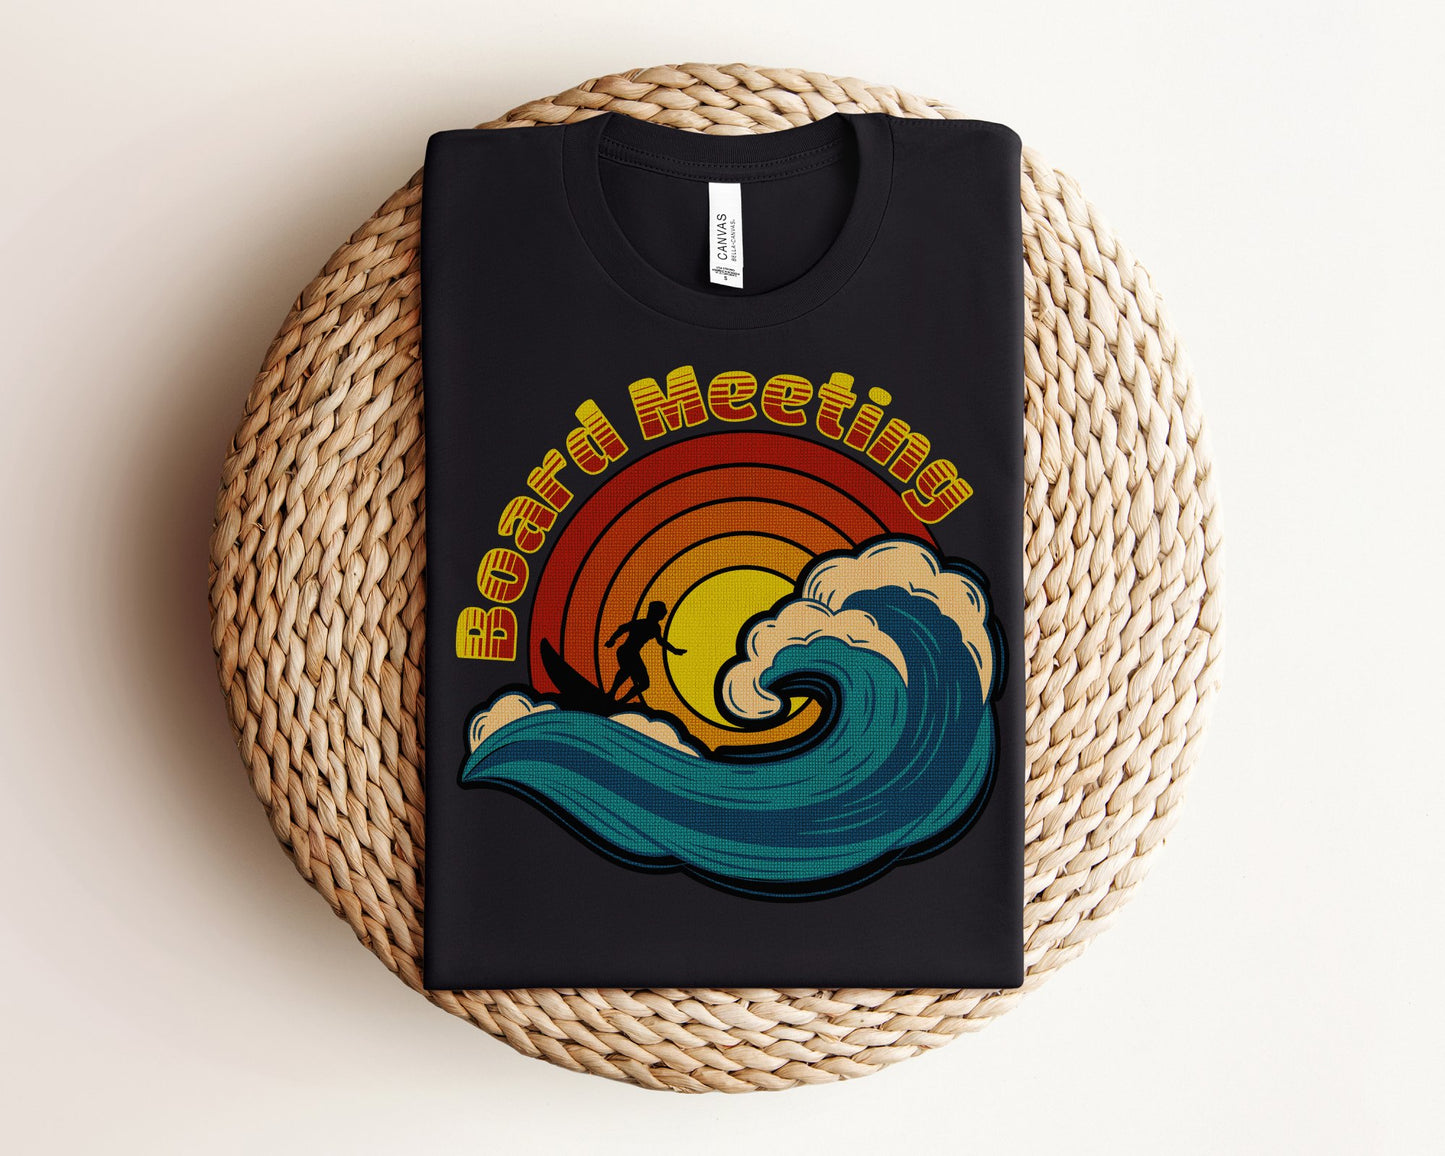 Surfing, Women Surfing Surf Gift, Surfing Shirt, Funny Surfing Shirt, Surf